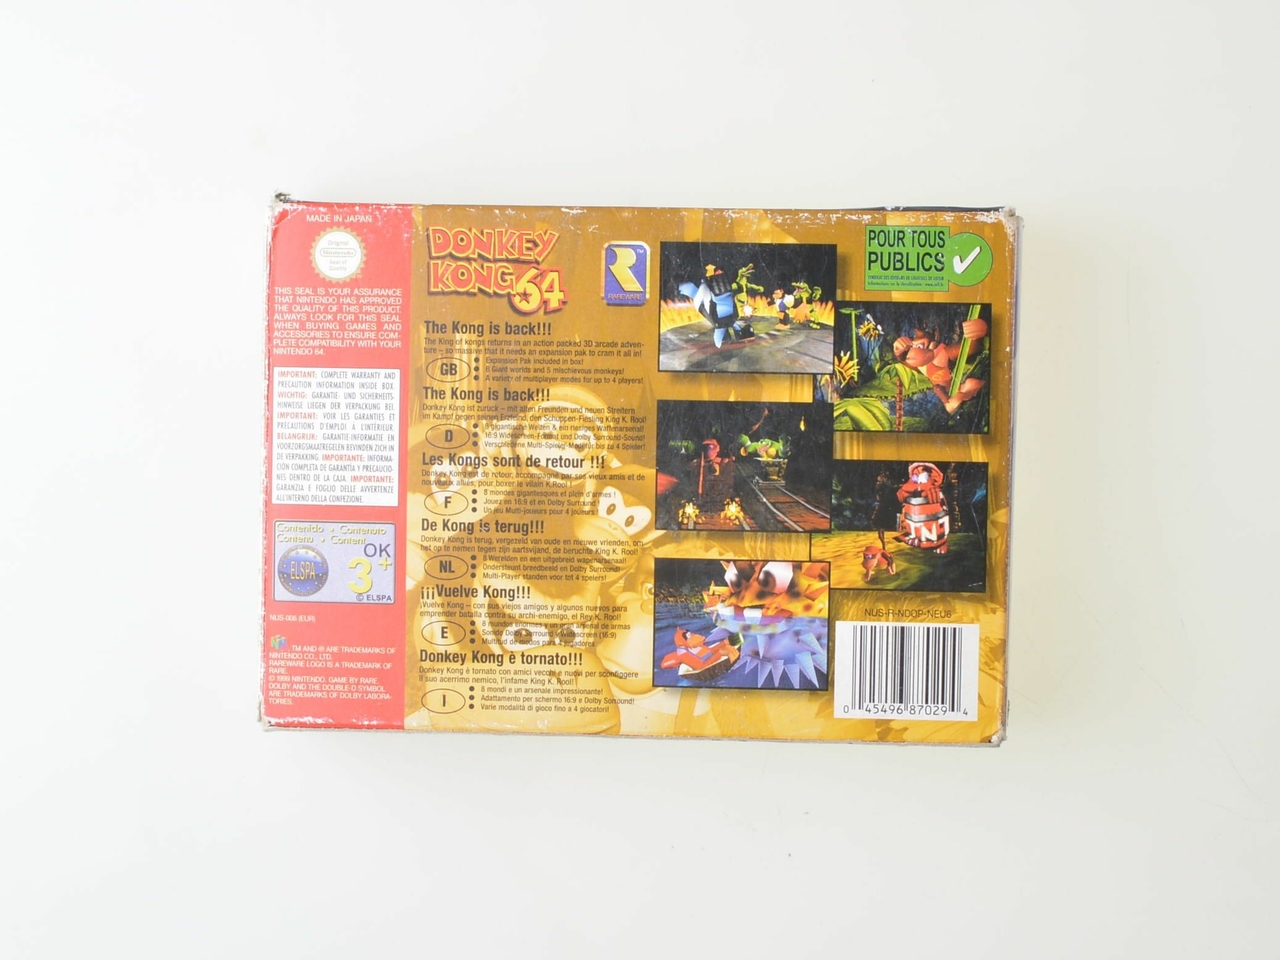 Donkey Kong 64 - Nintendo 64 Games [Complete] - 2